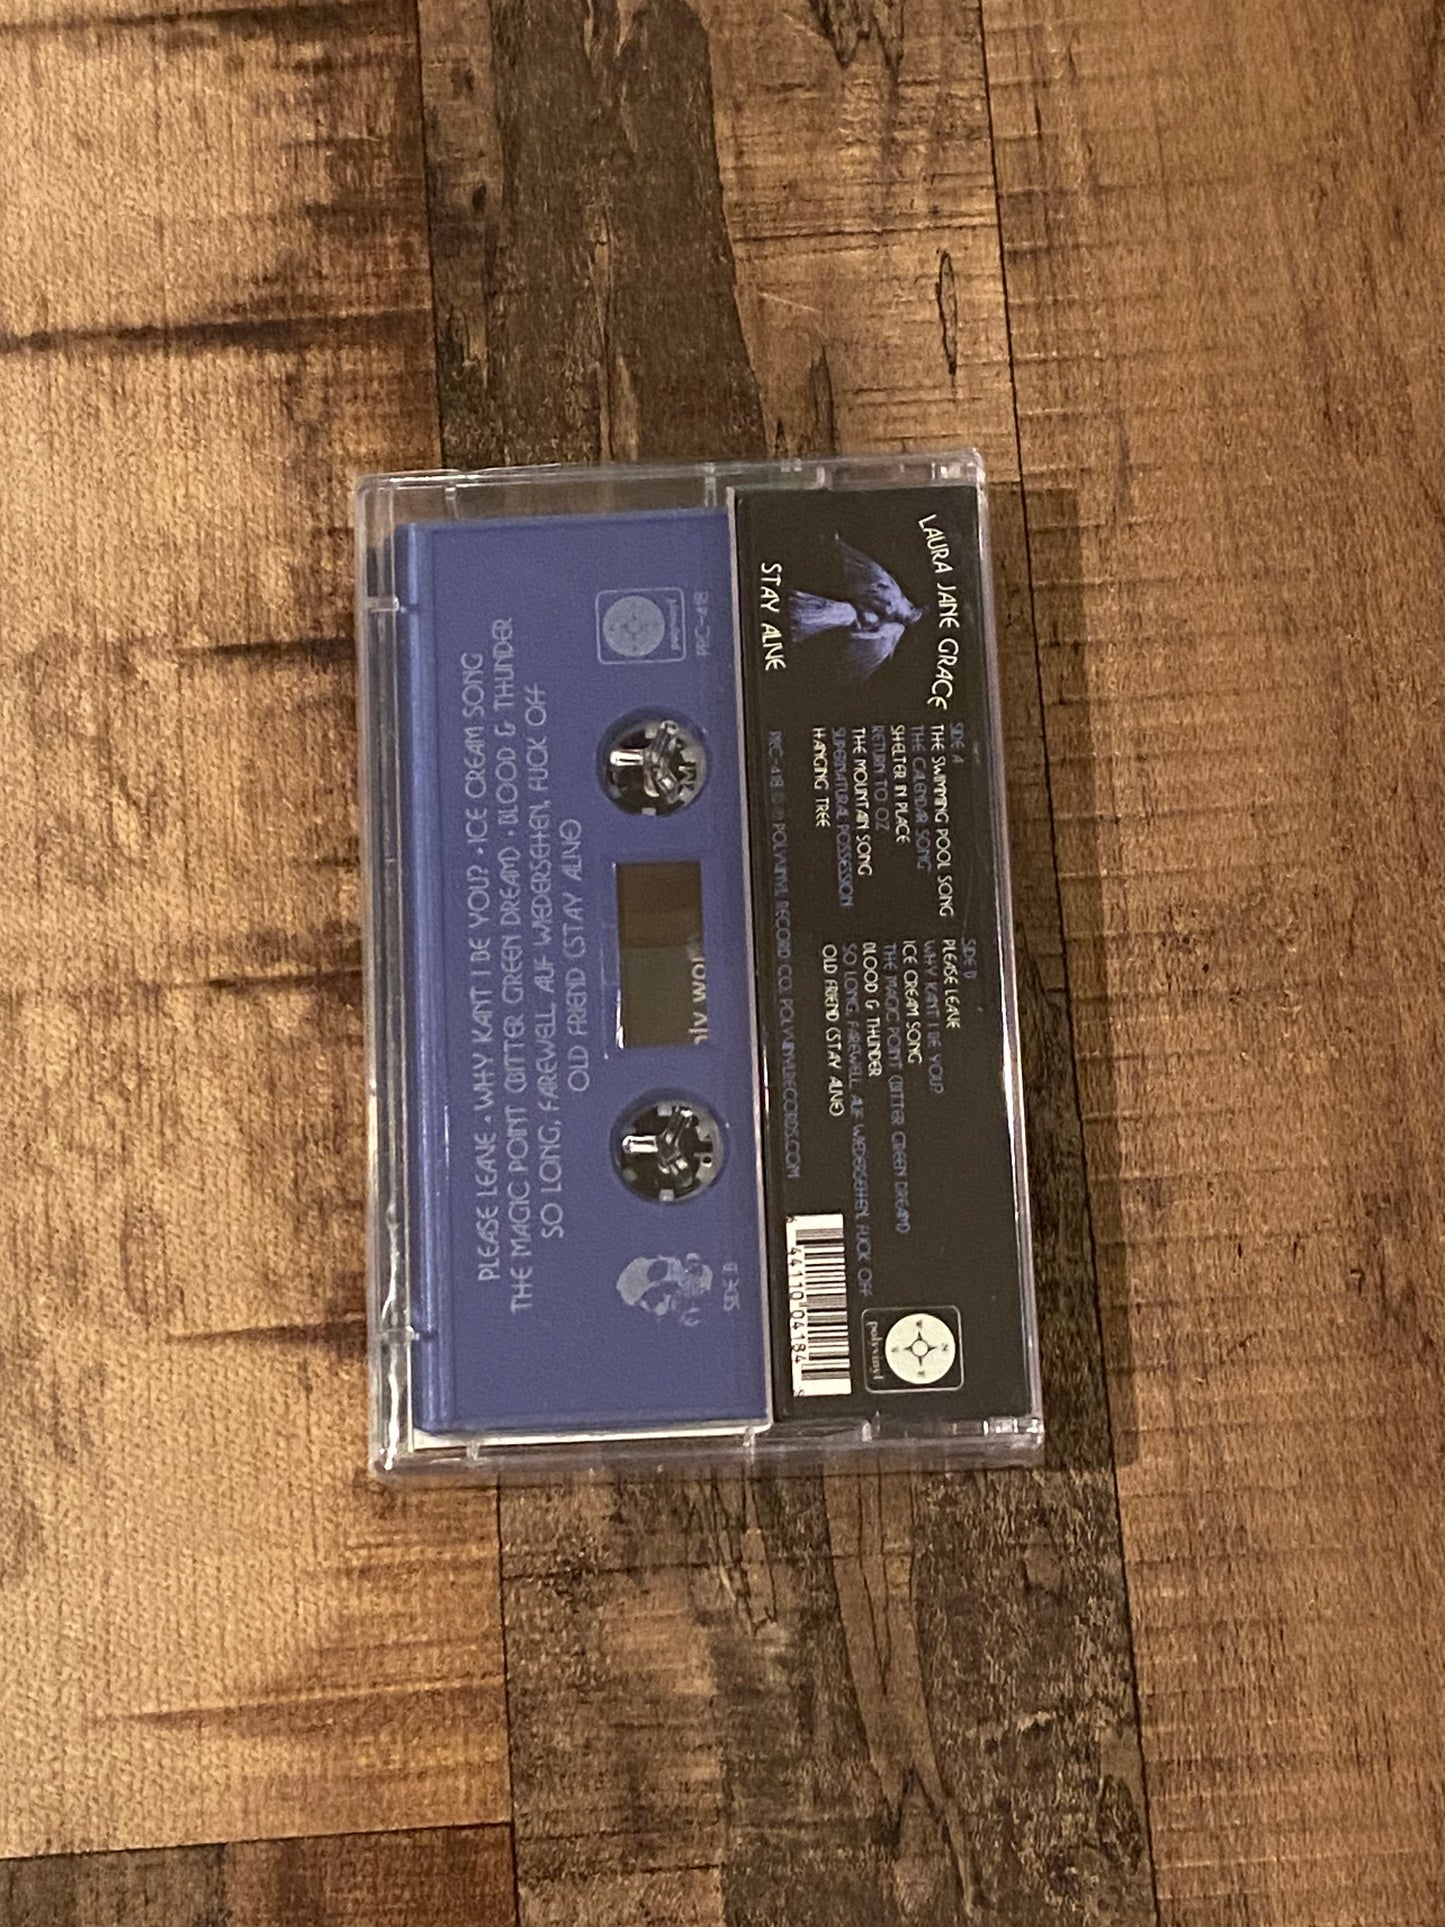 Laura Jane Grace - 'Stay Alive' Cassette